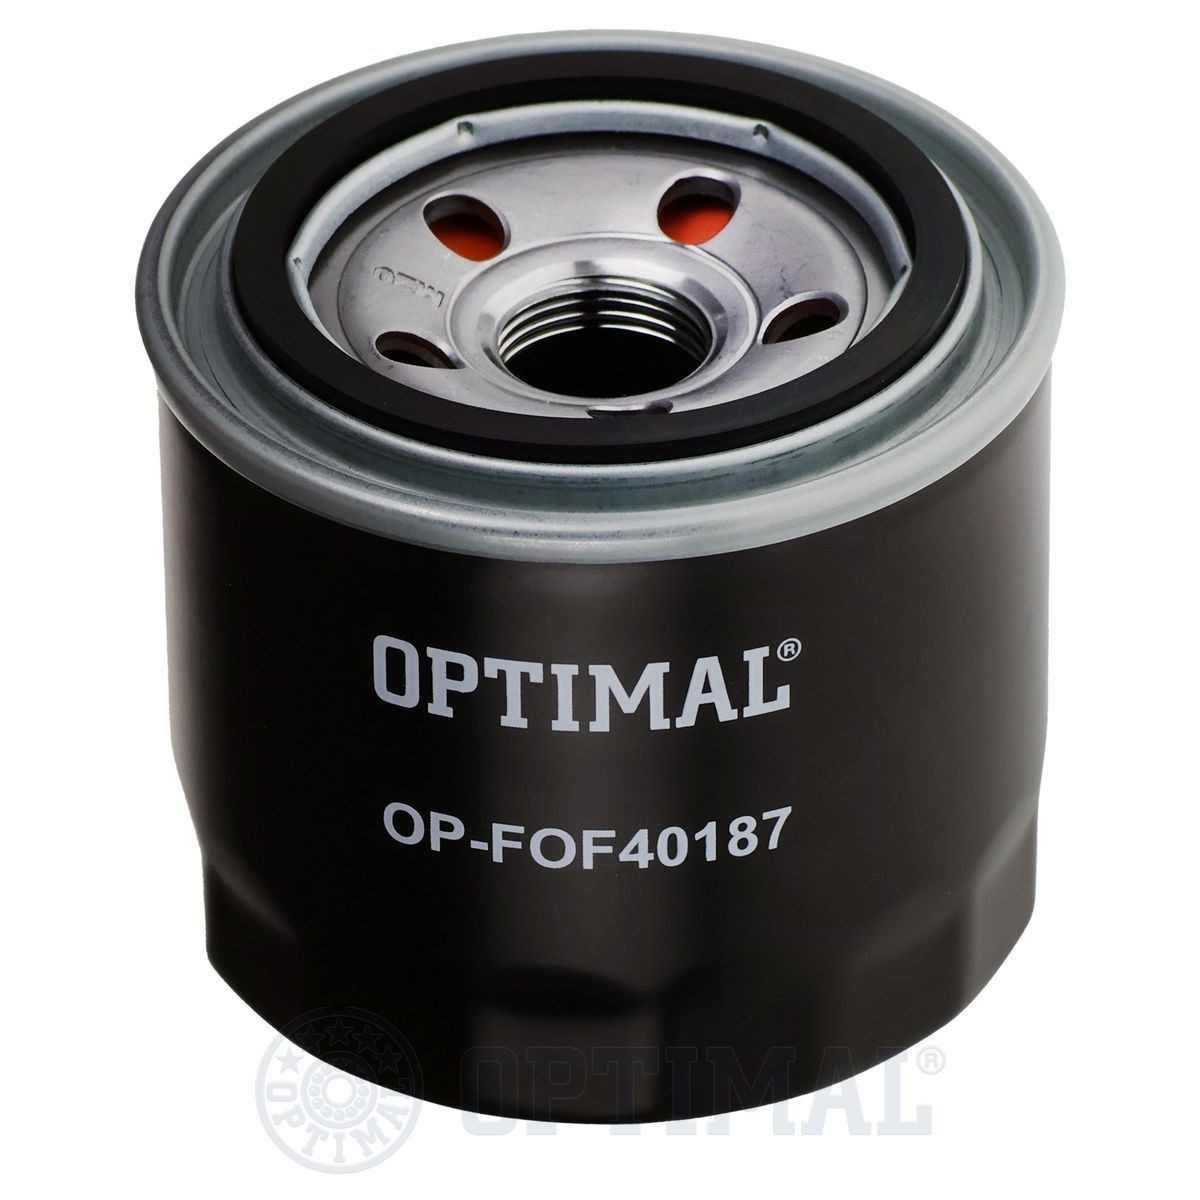 OPTIMAL OP-FOF40187 Oil filter 15241-3209-4